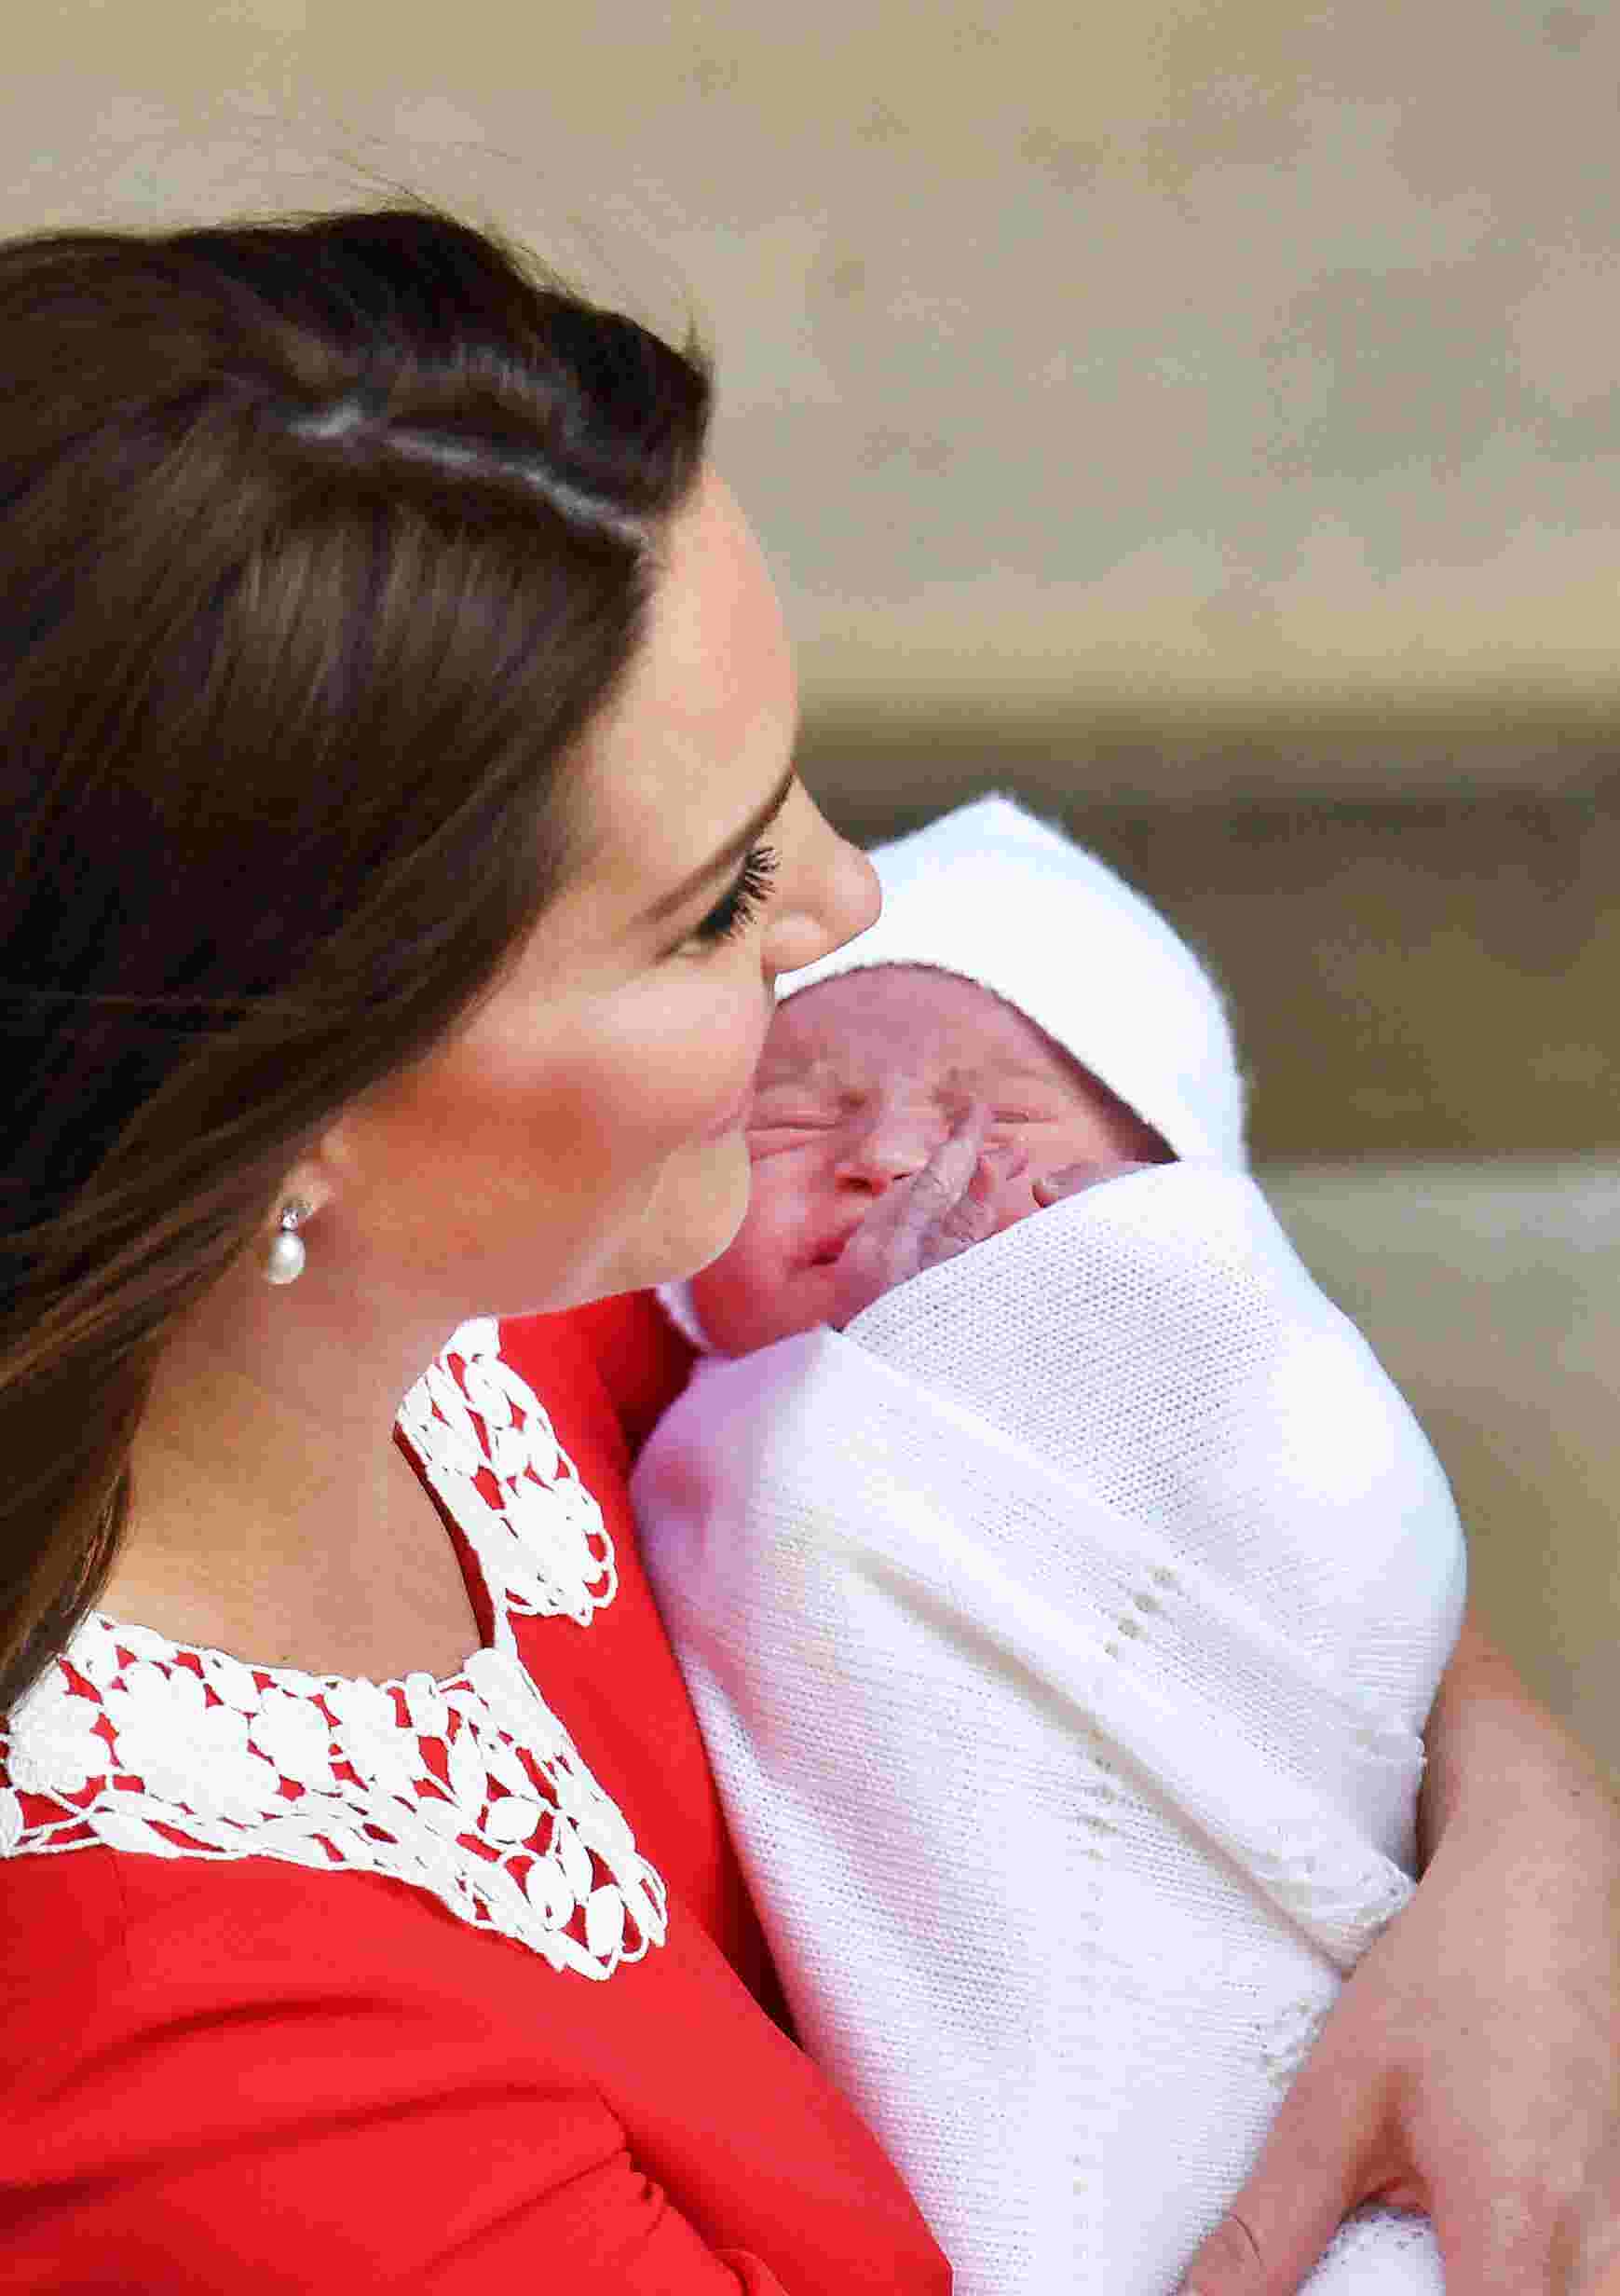 Royal baby name revealed: Louis Arthur Charles